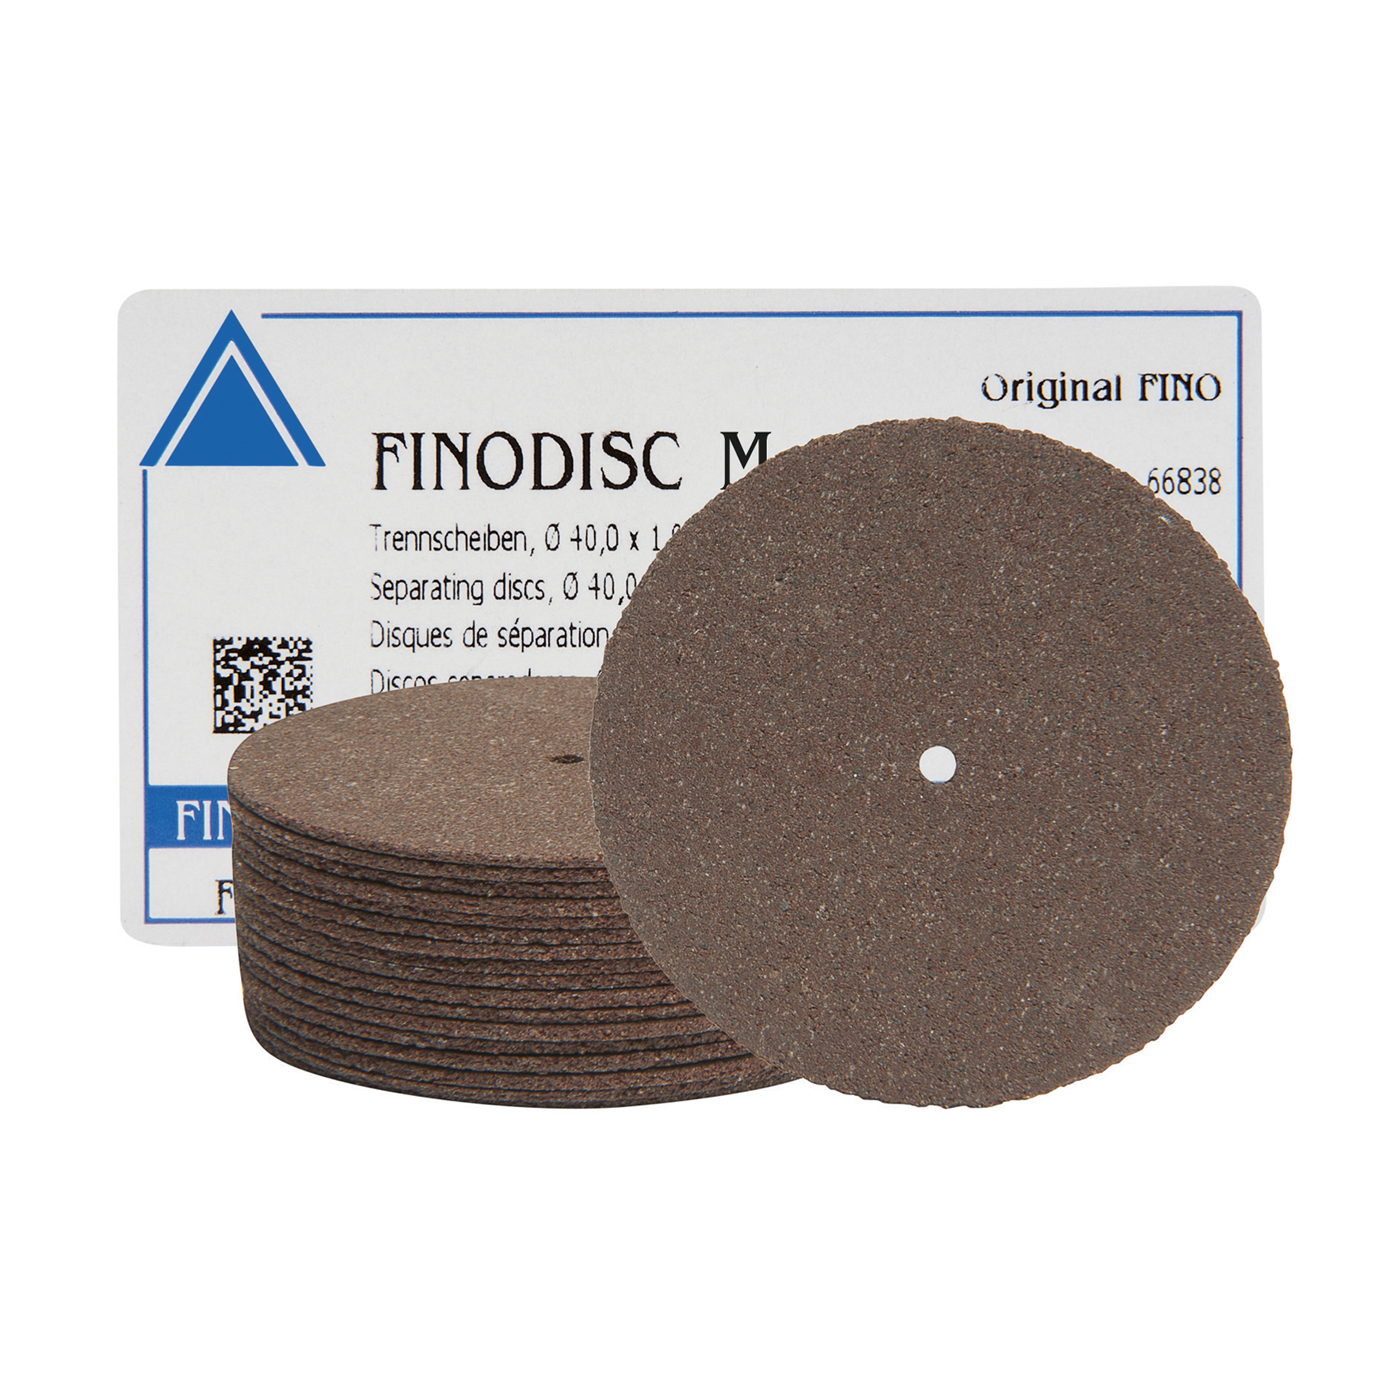 FINODISC M Separating Discs, ø 40 x 1.0 mm - 100 pieces